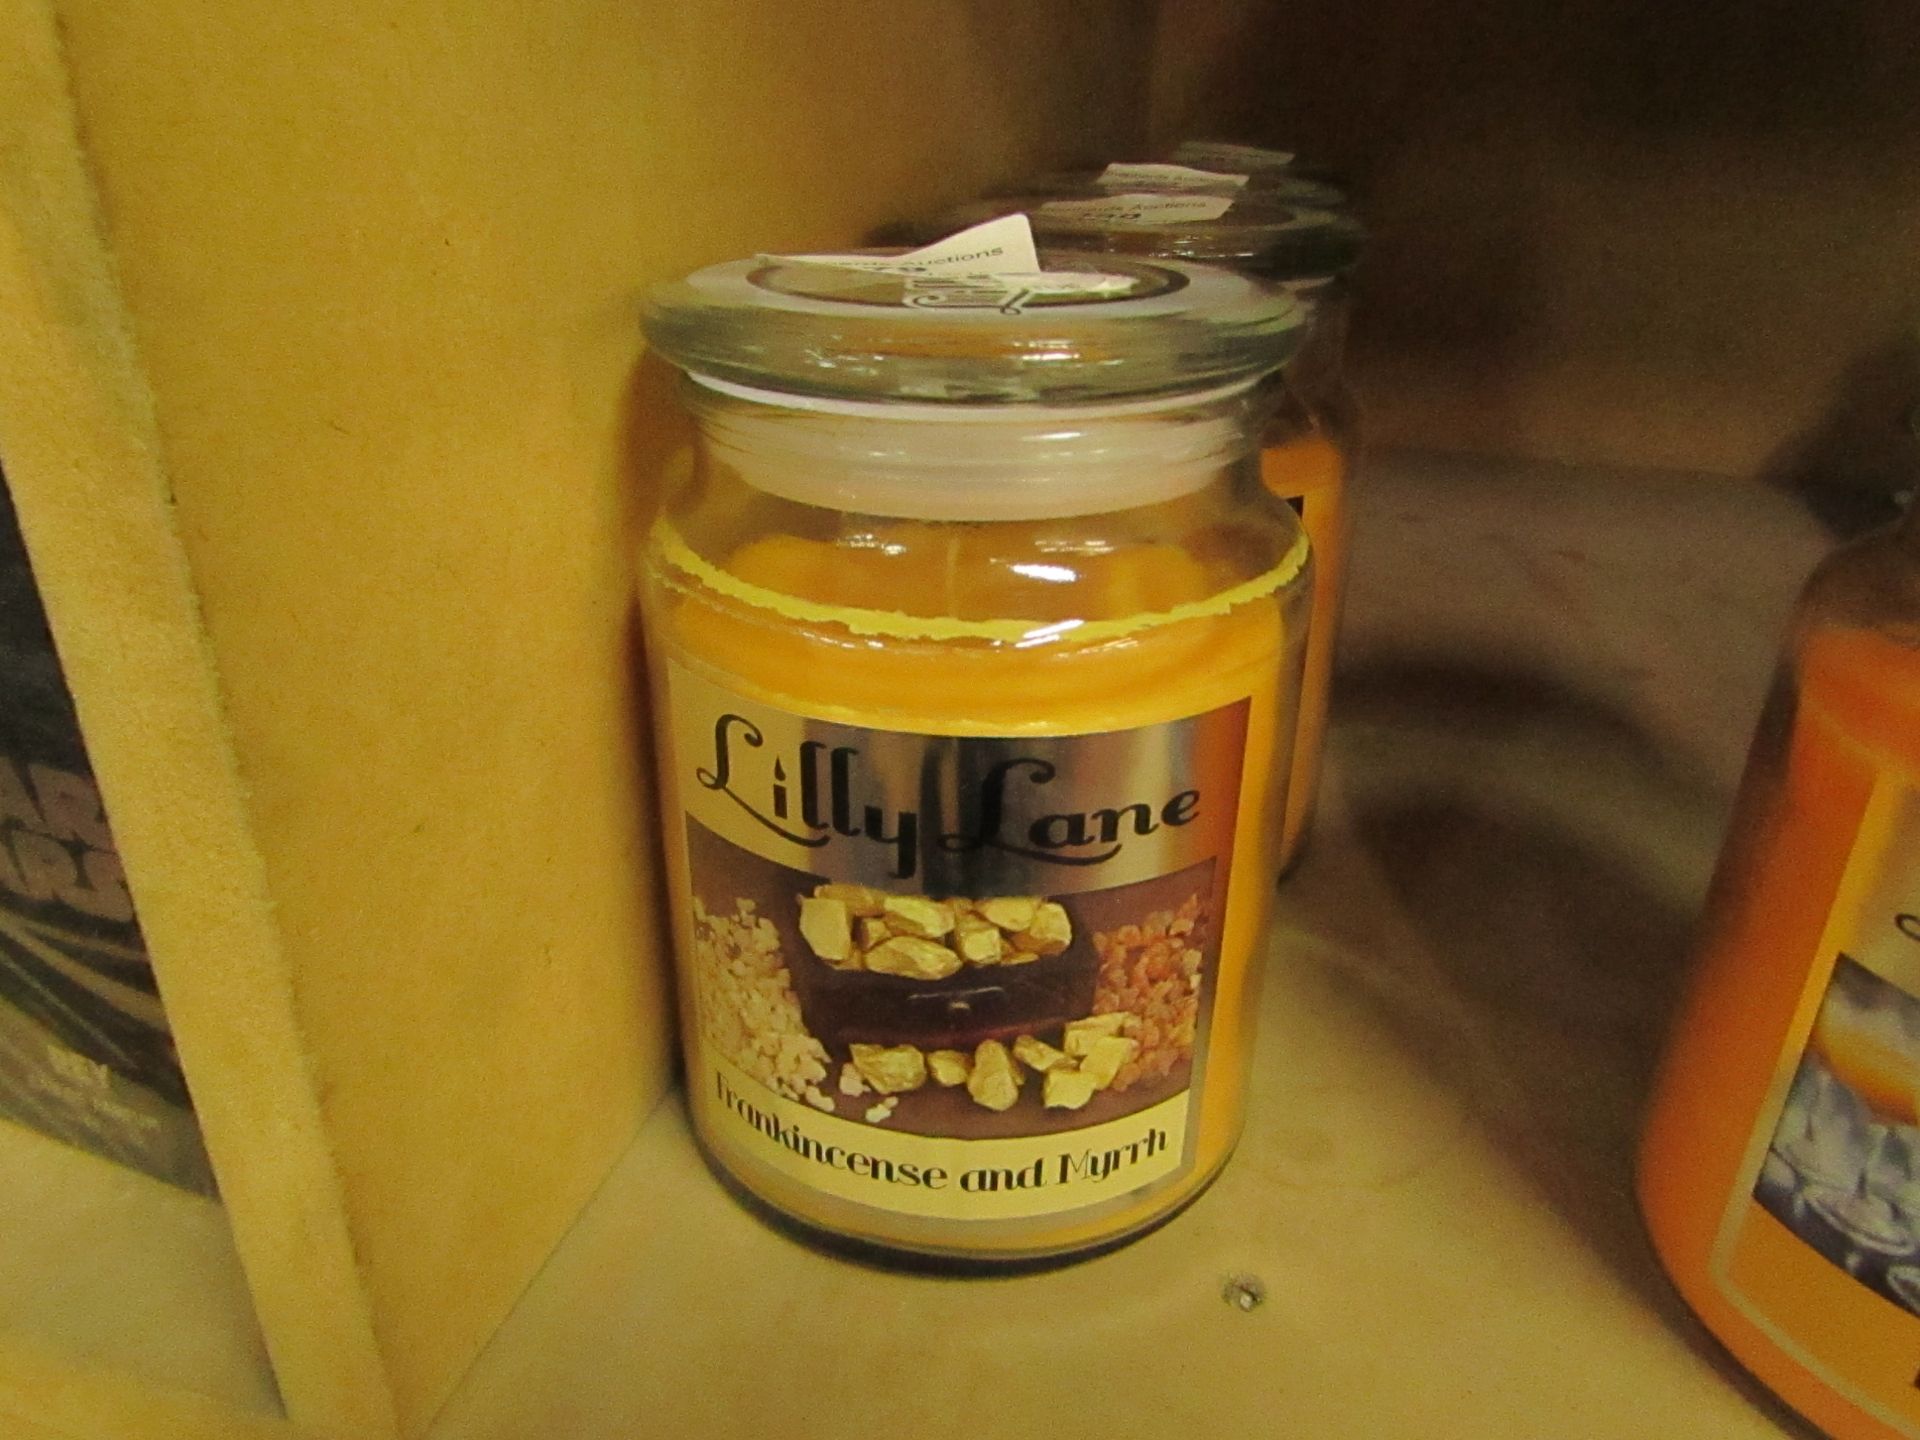 Lilly Lane Frankincense & Myrrh 16oz Candle in a glass jar. Smell Amazing! New